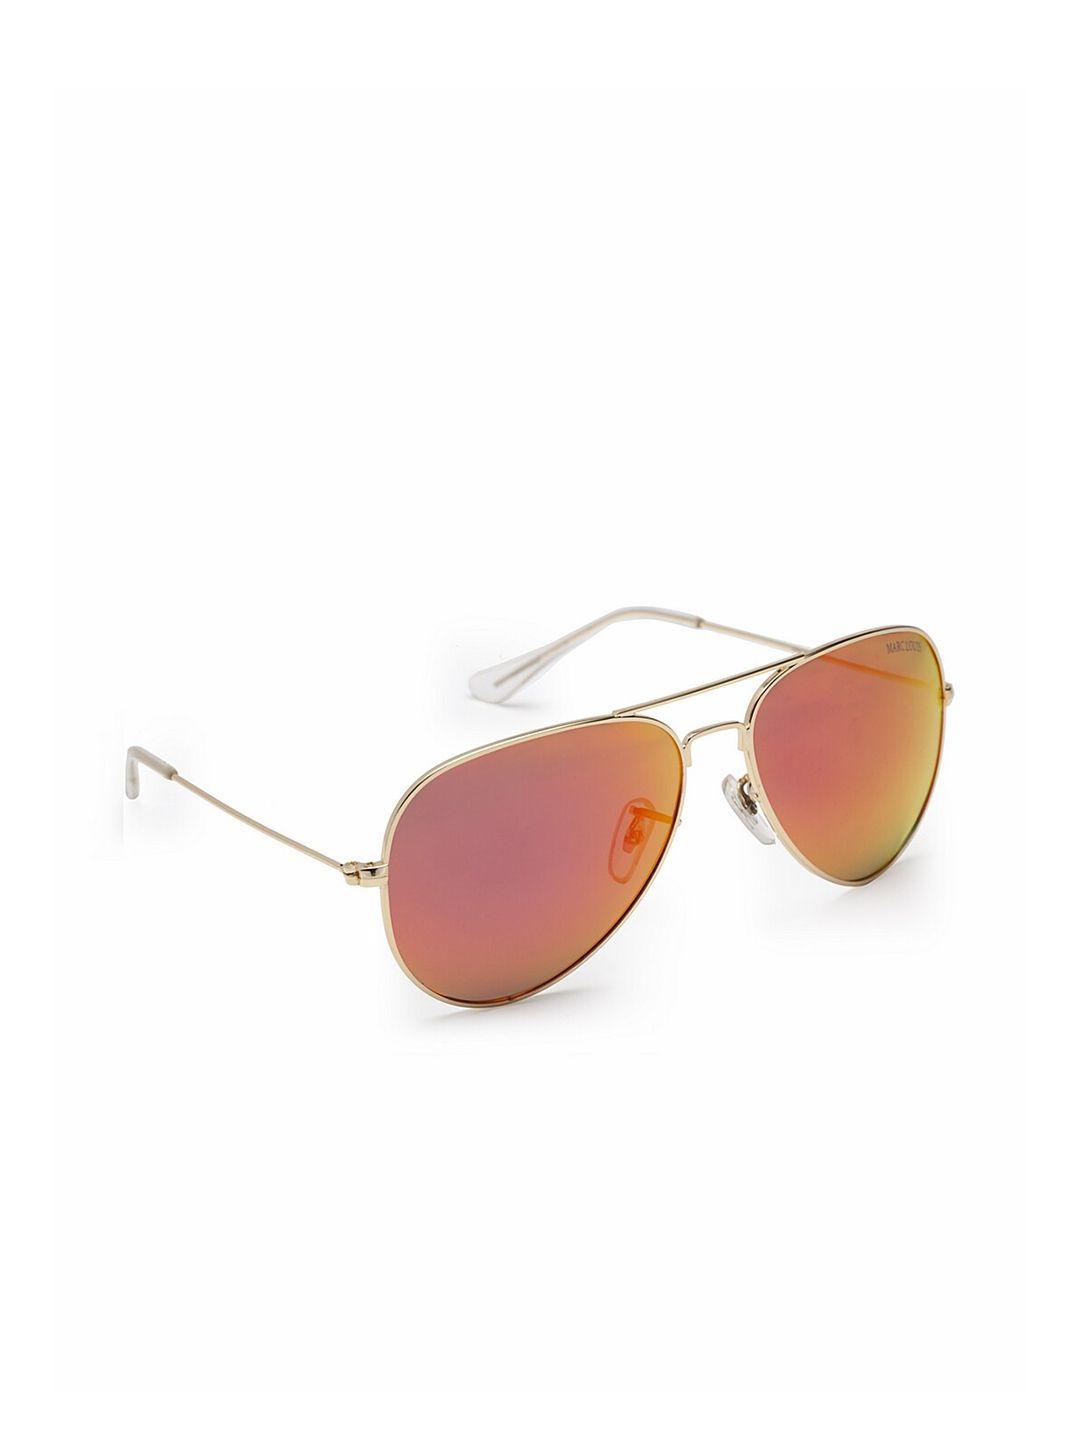 marc louis aviator sunglasses with uv protected lens 3025e